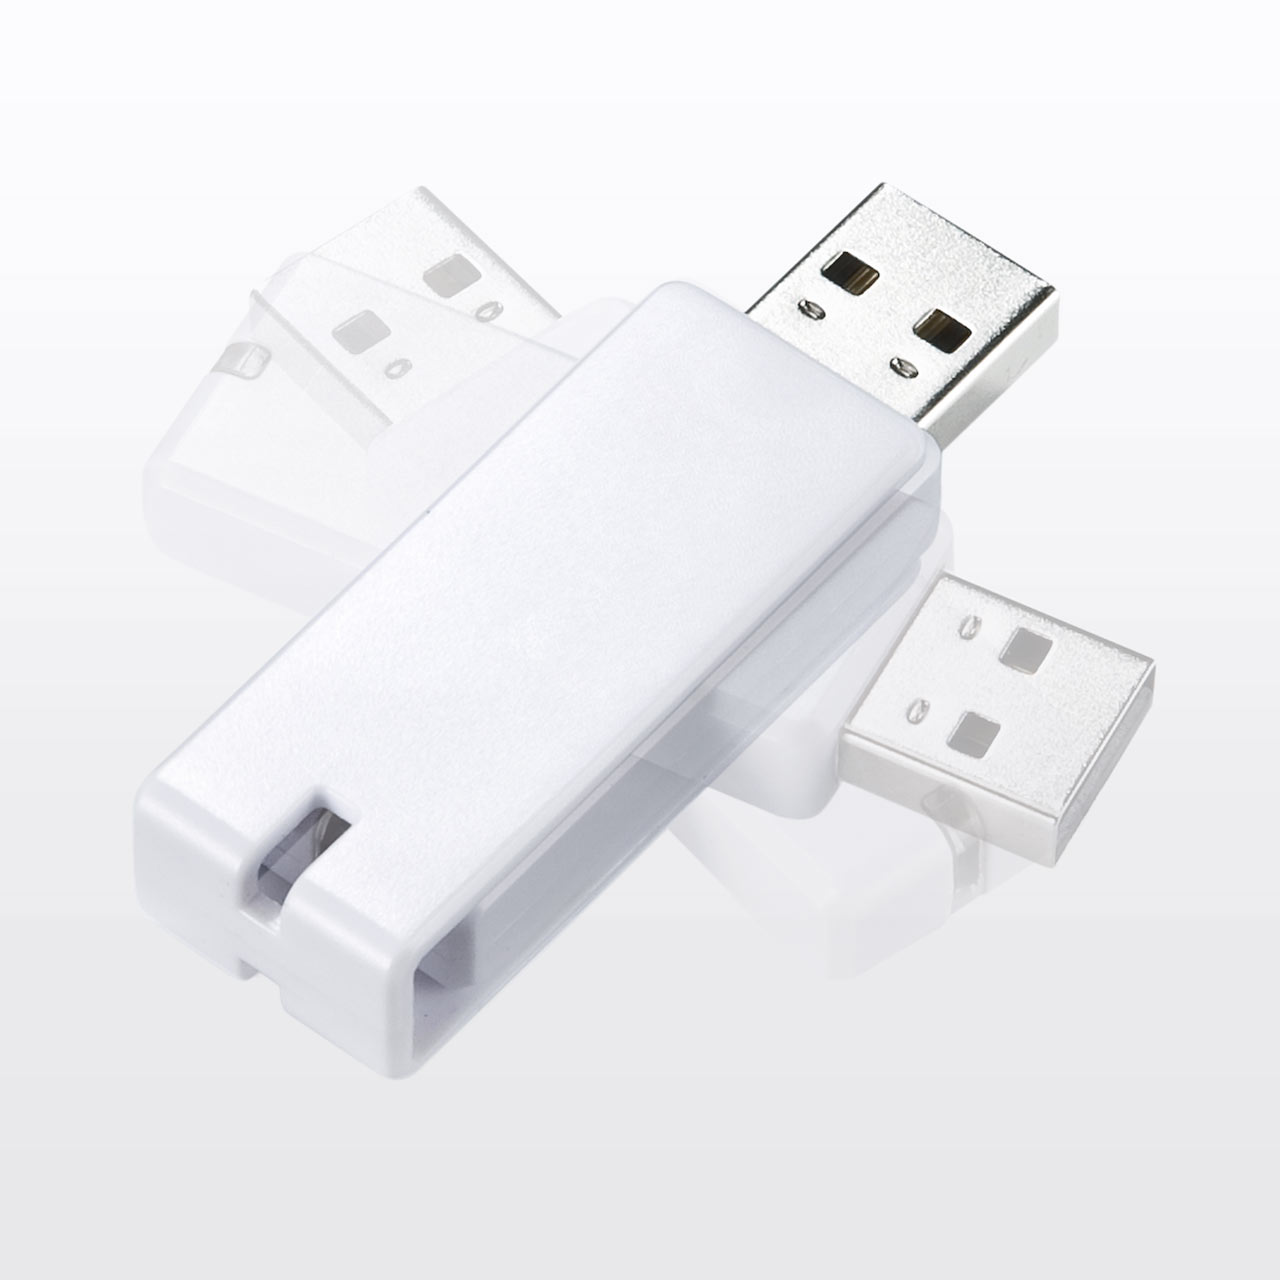 USBメモリ 64GB USB3.0 USB 5Gbps スイング式 キャップレス 紛失防止 ストラップ付き 名入れ対応 記念品 販促品 ノベルティ  ホワイト 600-3US64GW